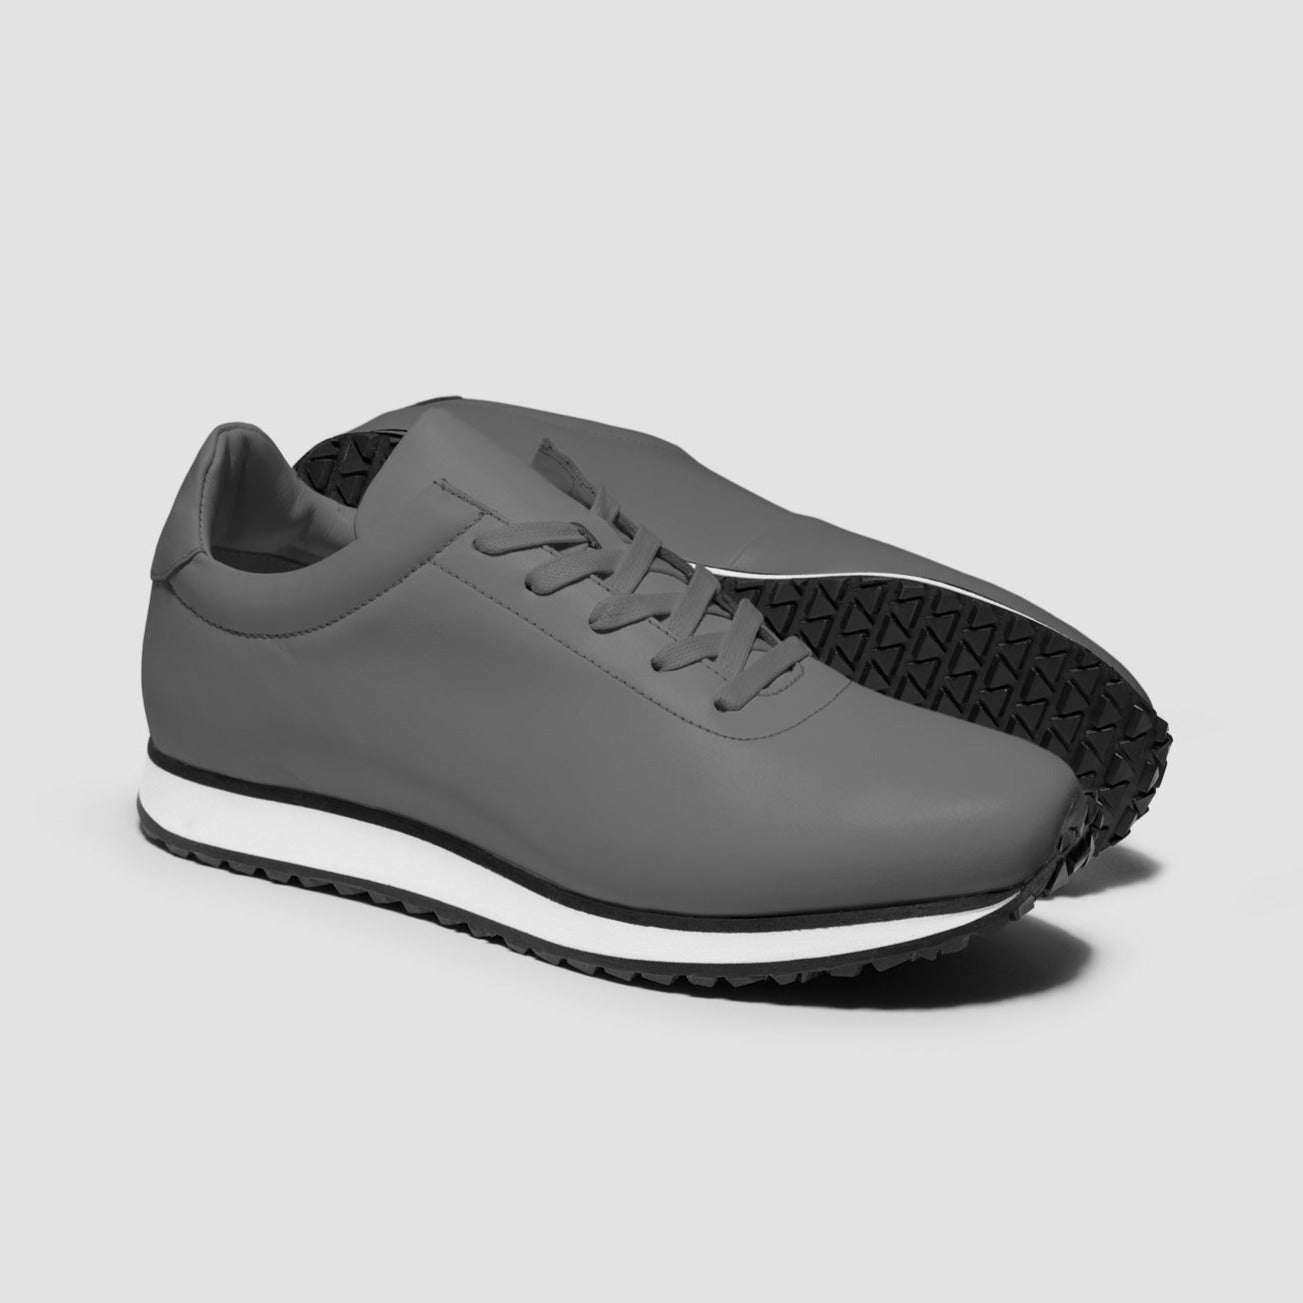 The Proper Running Sneaker ™ 003 - The Proper Label ™